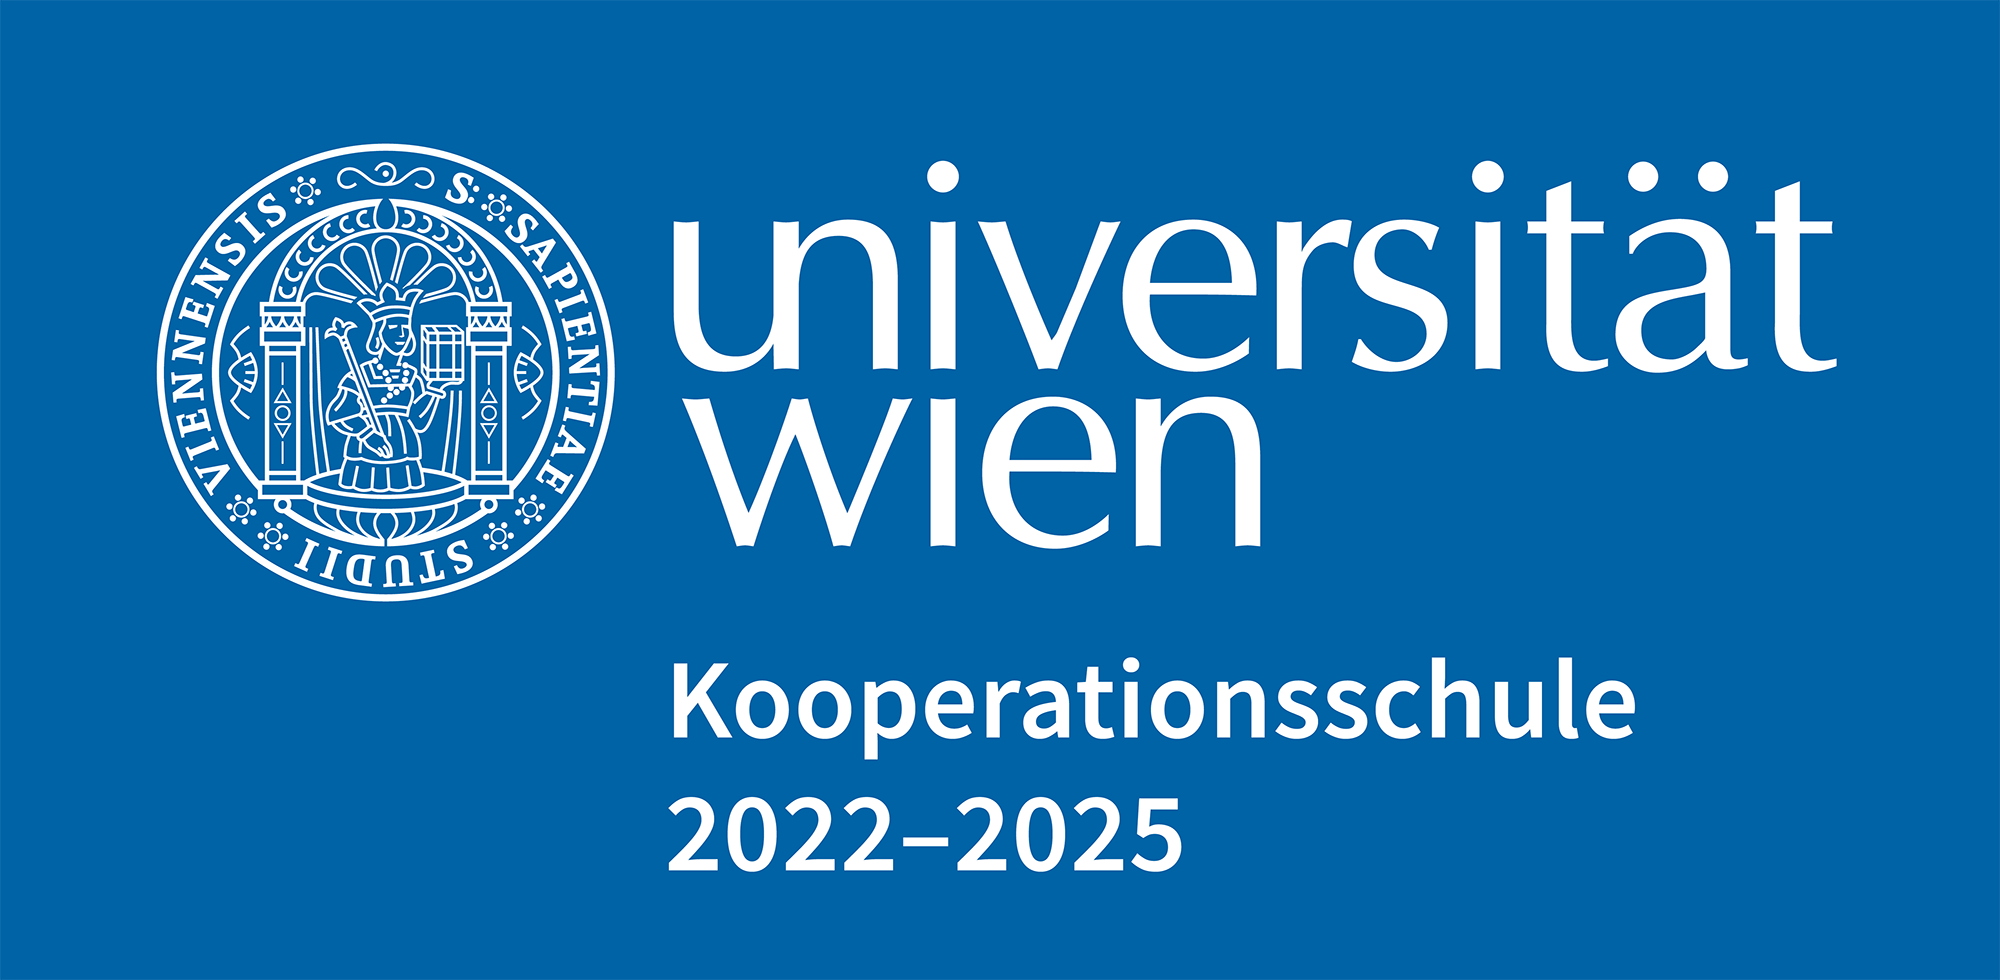 Kooperationsschule_2022-2025_blau